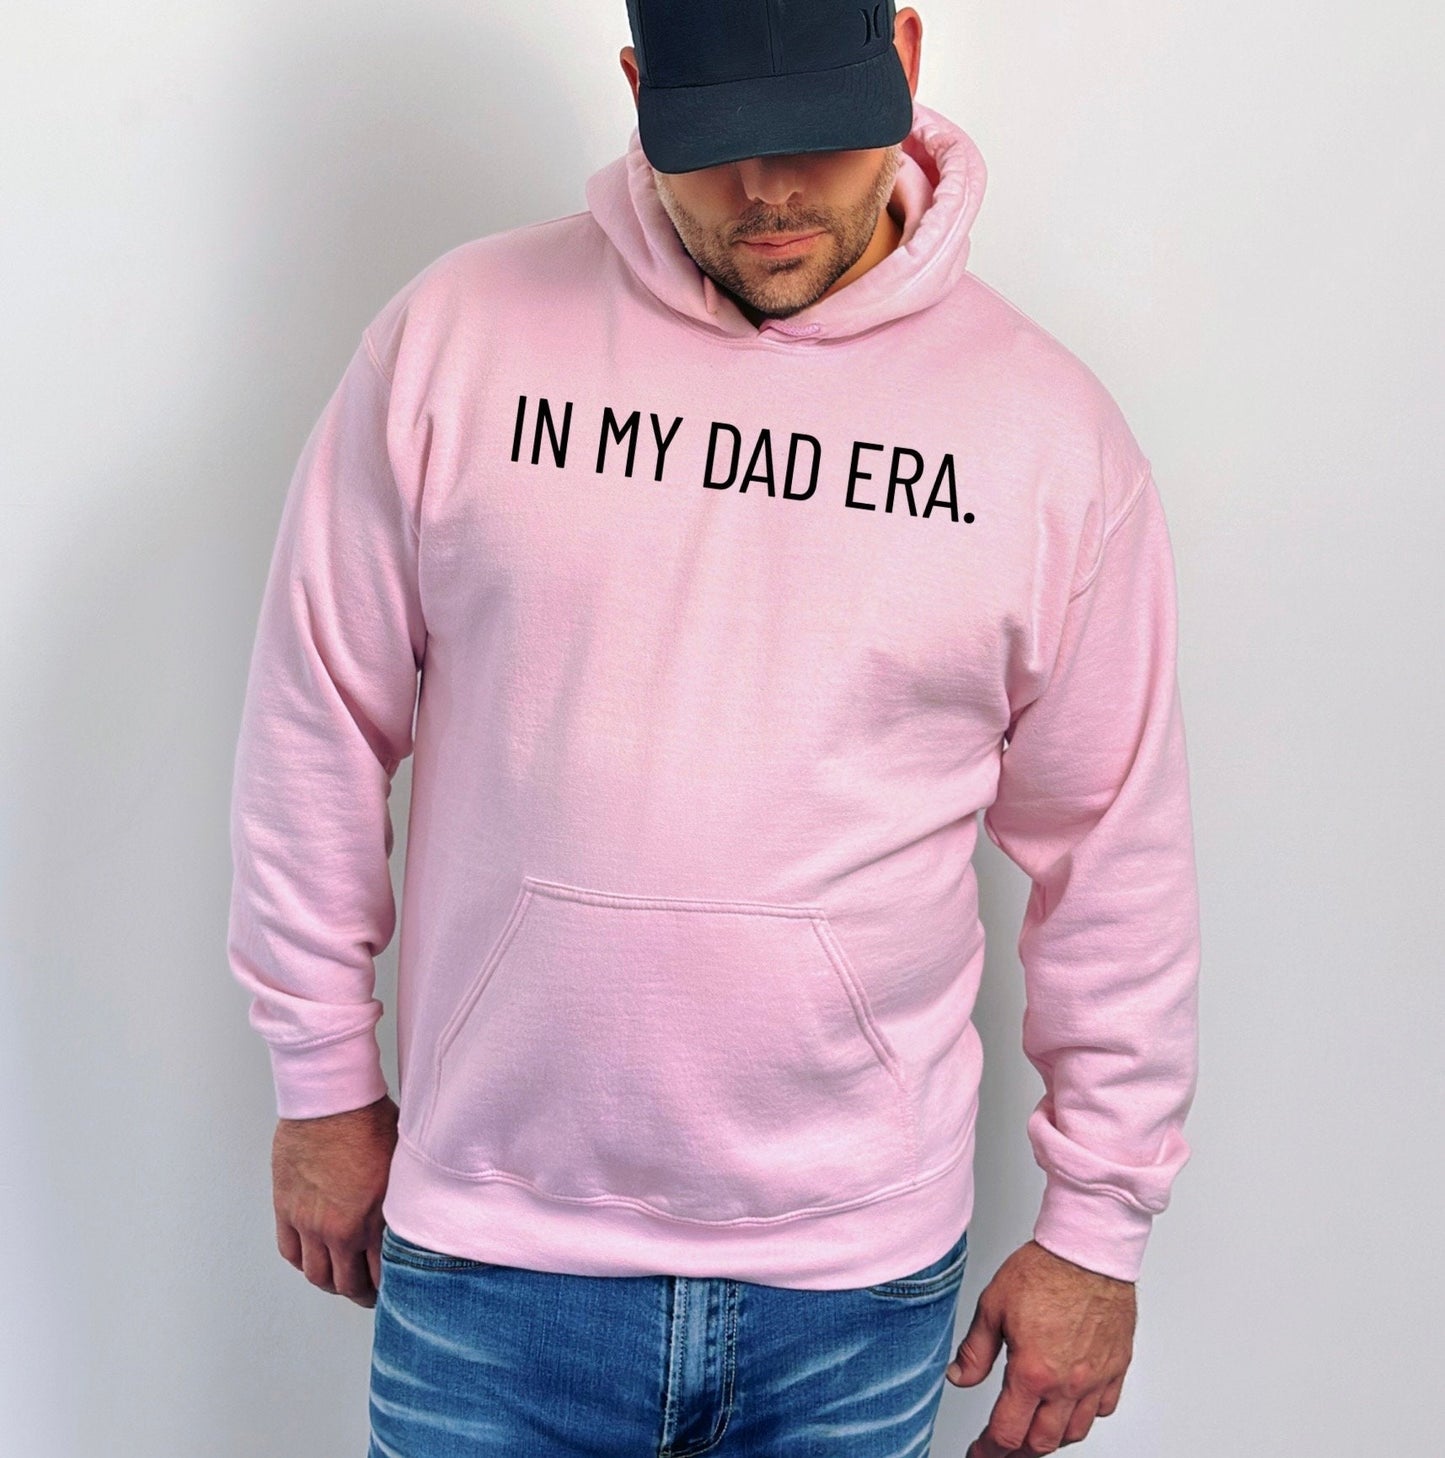 In My Dad Era Sweatshirt, In My Dad Era Shirt, In My Dad Era Crewneck, In My Dad Era Sweater, Oversized Sweater, Comfy Sweatshirt, Dad Gift